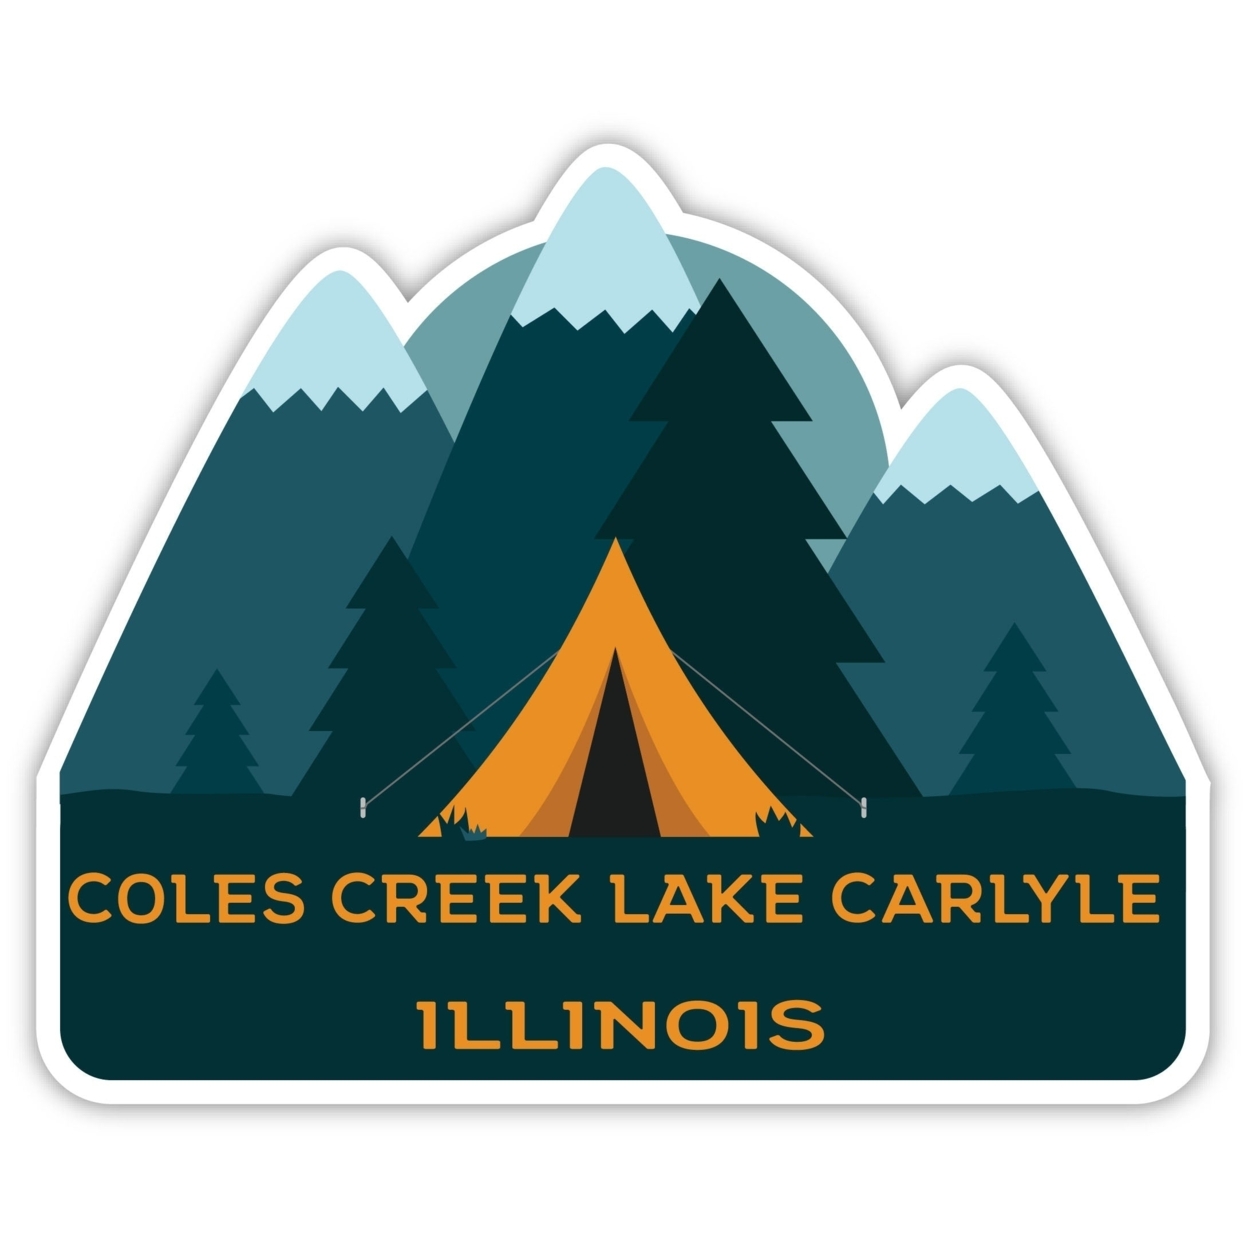 Coles Creek Lake Carlyle Illinois Souvenir Decorative Stickers (Choose Theme And Size) - Single Unit, 6-Inch, Tent